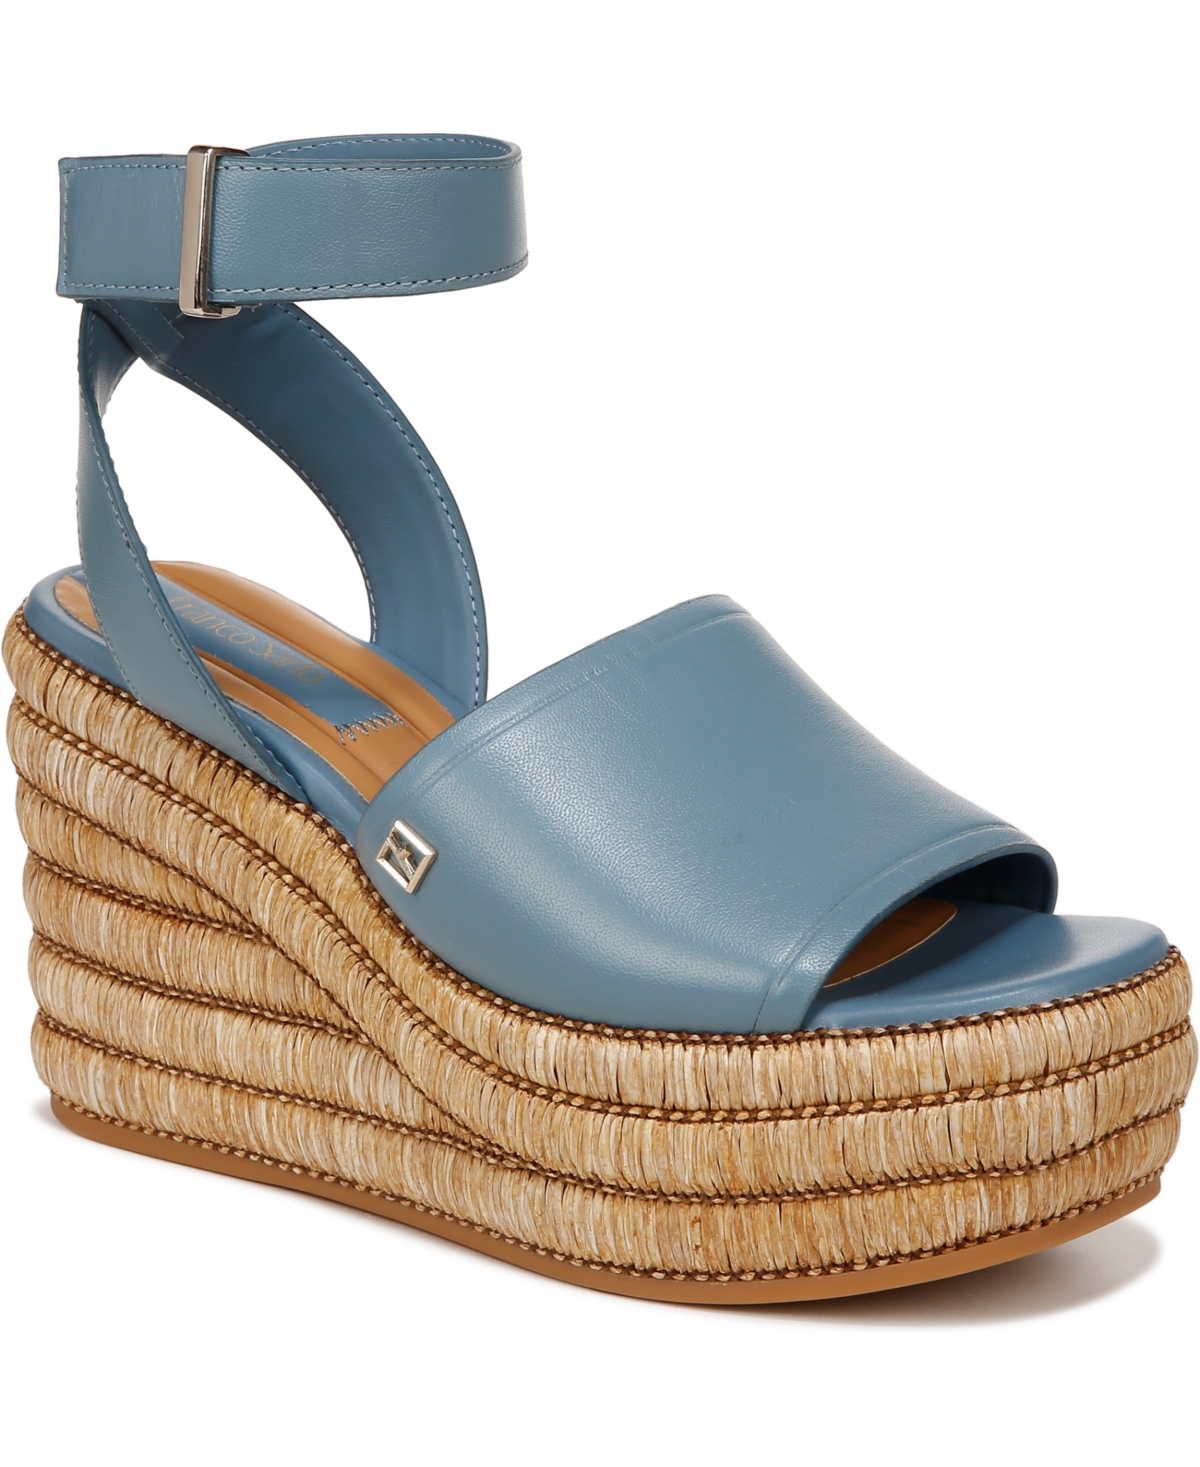 Toni Espadrille Wedge Sandals - Denim Blue Leather